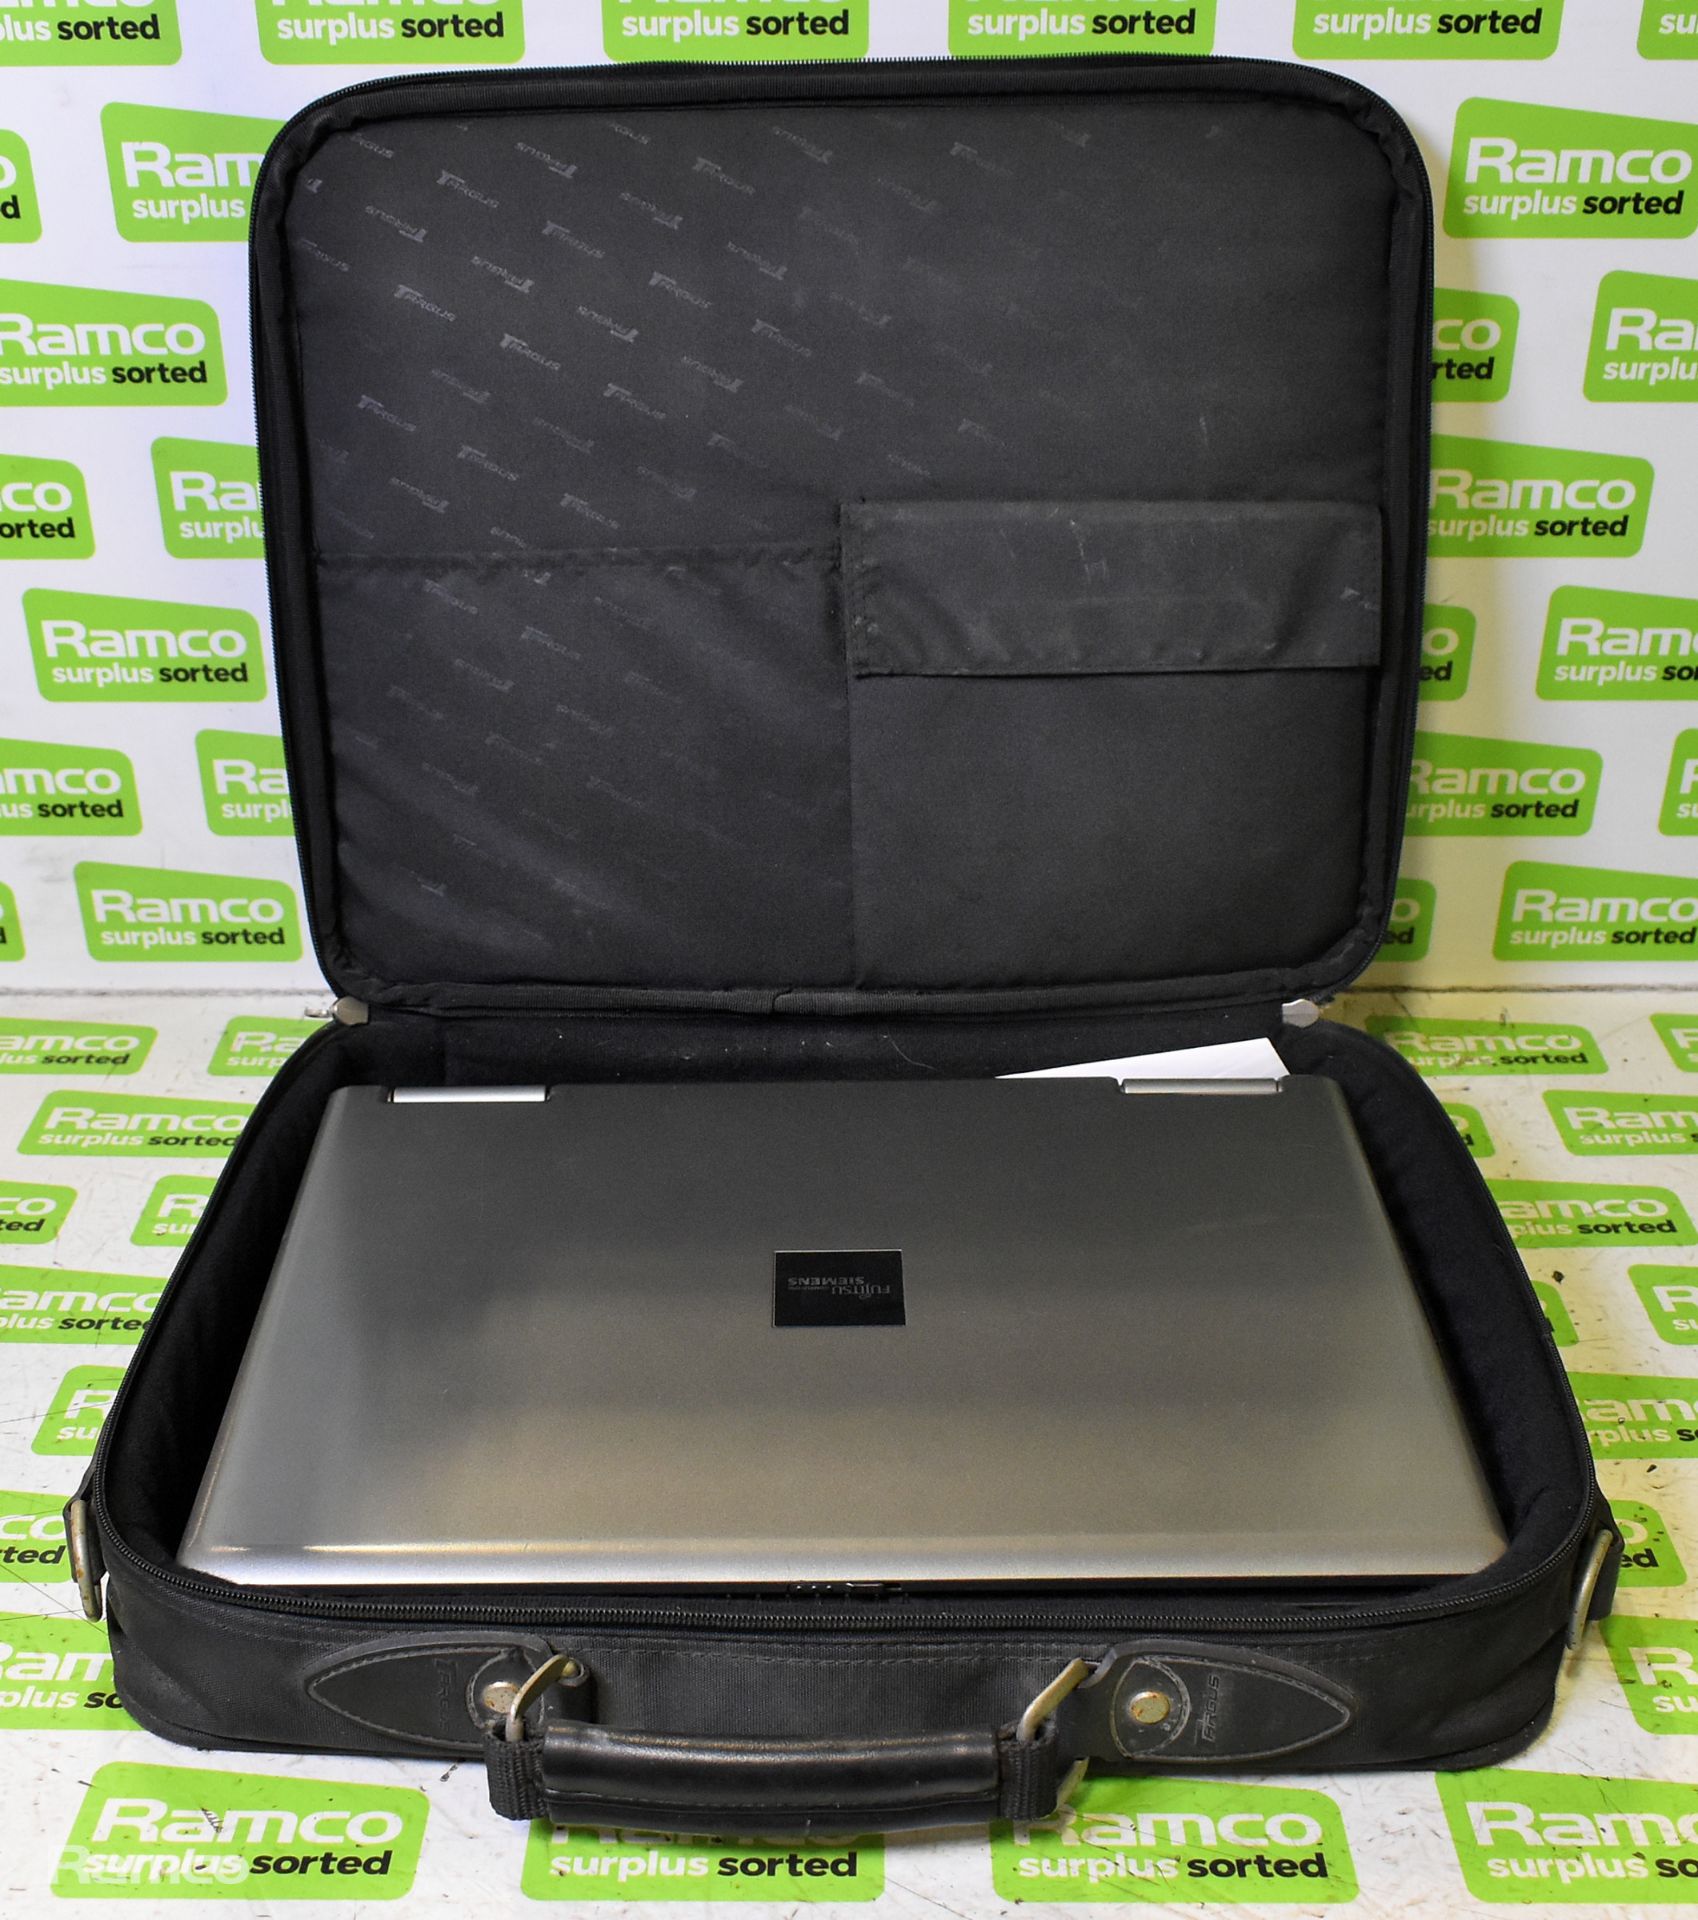 Siemens Esprimo mobile V5515 laptop, Dell PP02 laptop in carry case, Dell PP01L laptop in carry case - Image 9 of 22